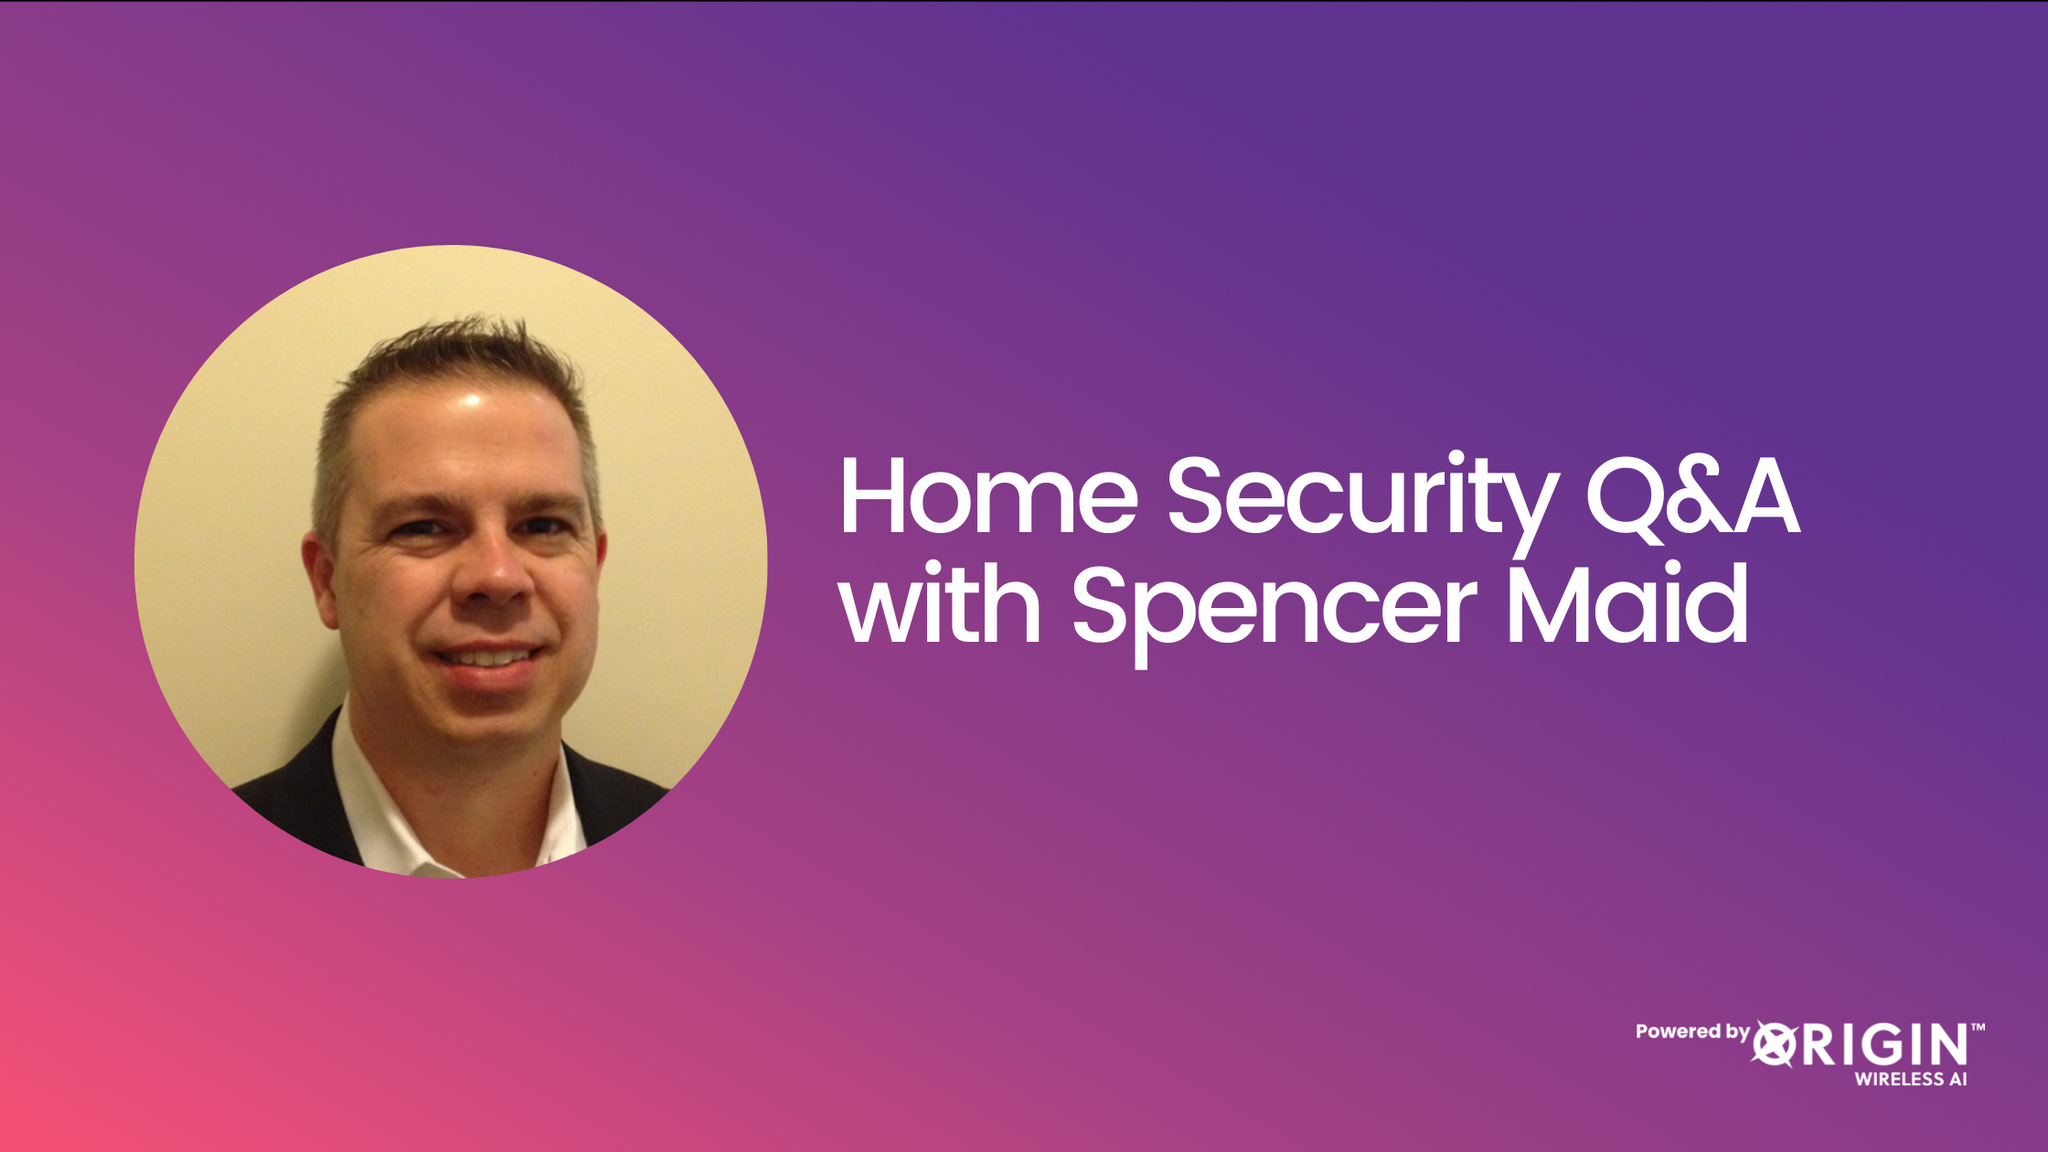 Home Security Q&A